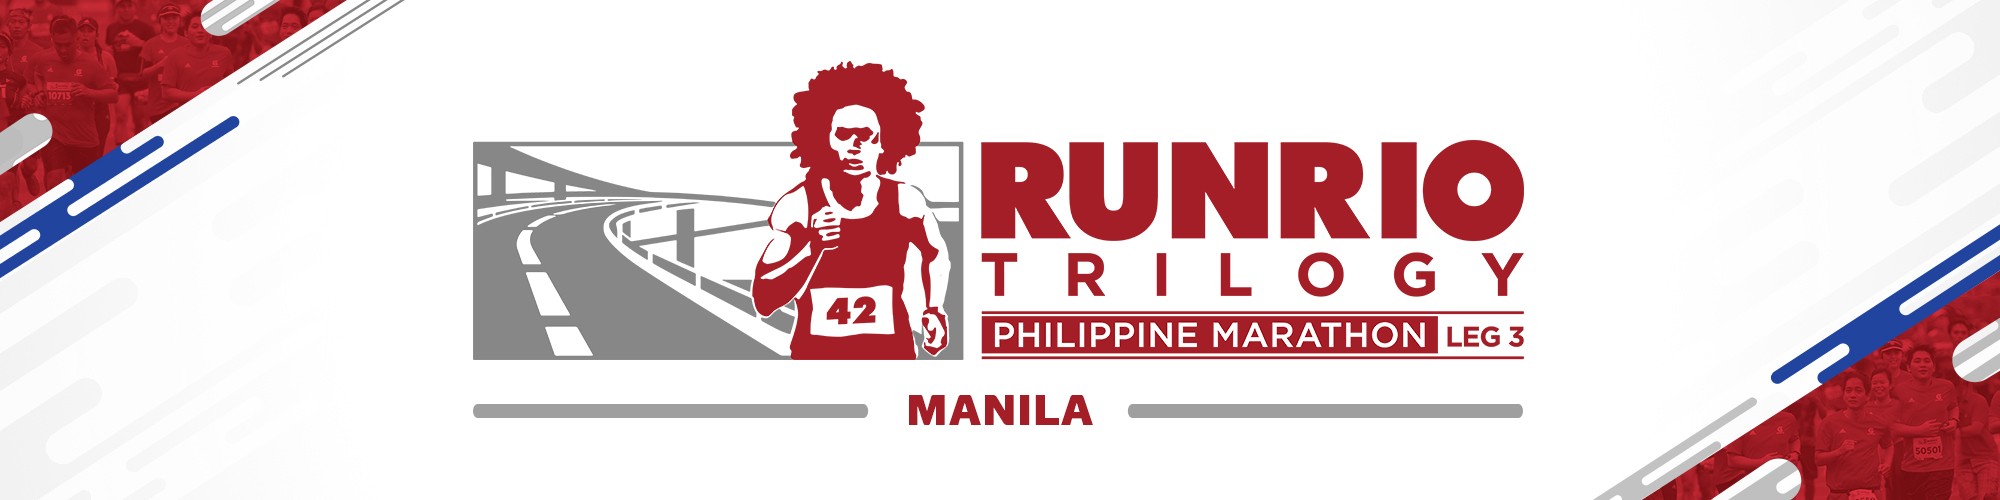 RUNRIO Trilogy Manila Leg 3